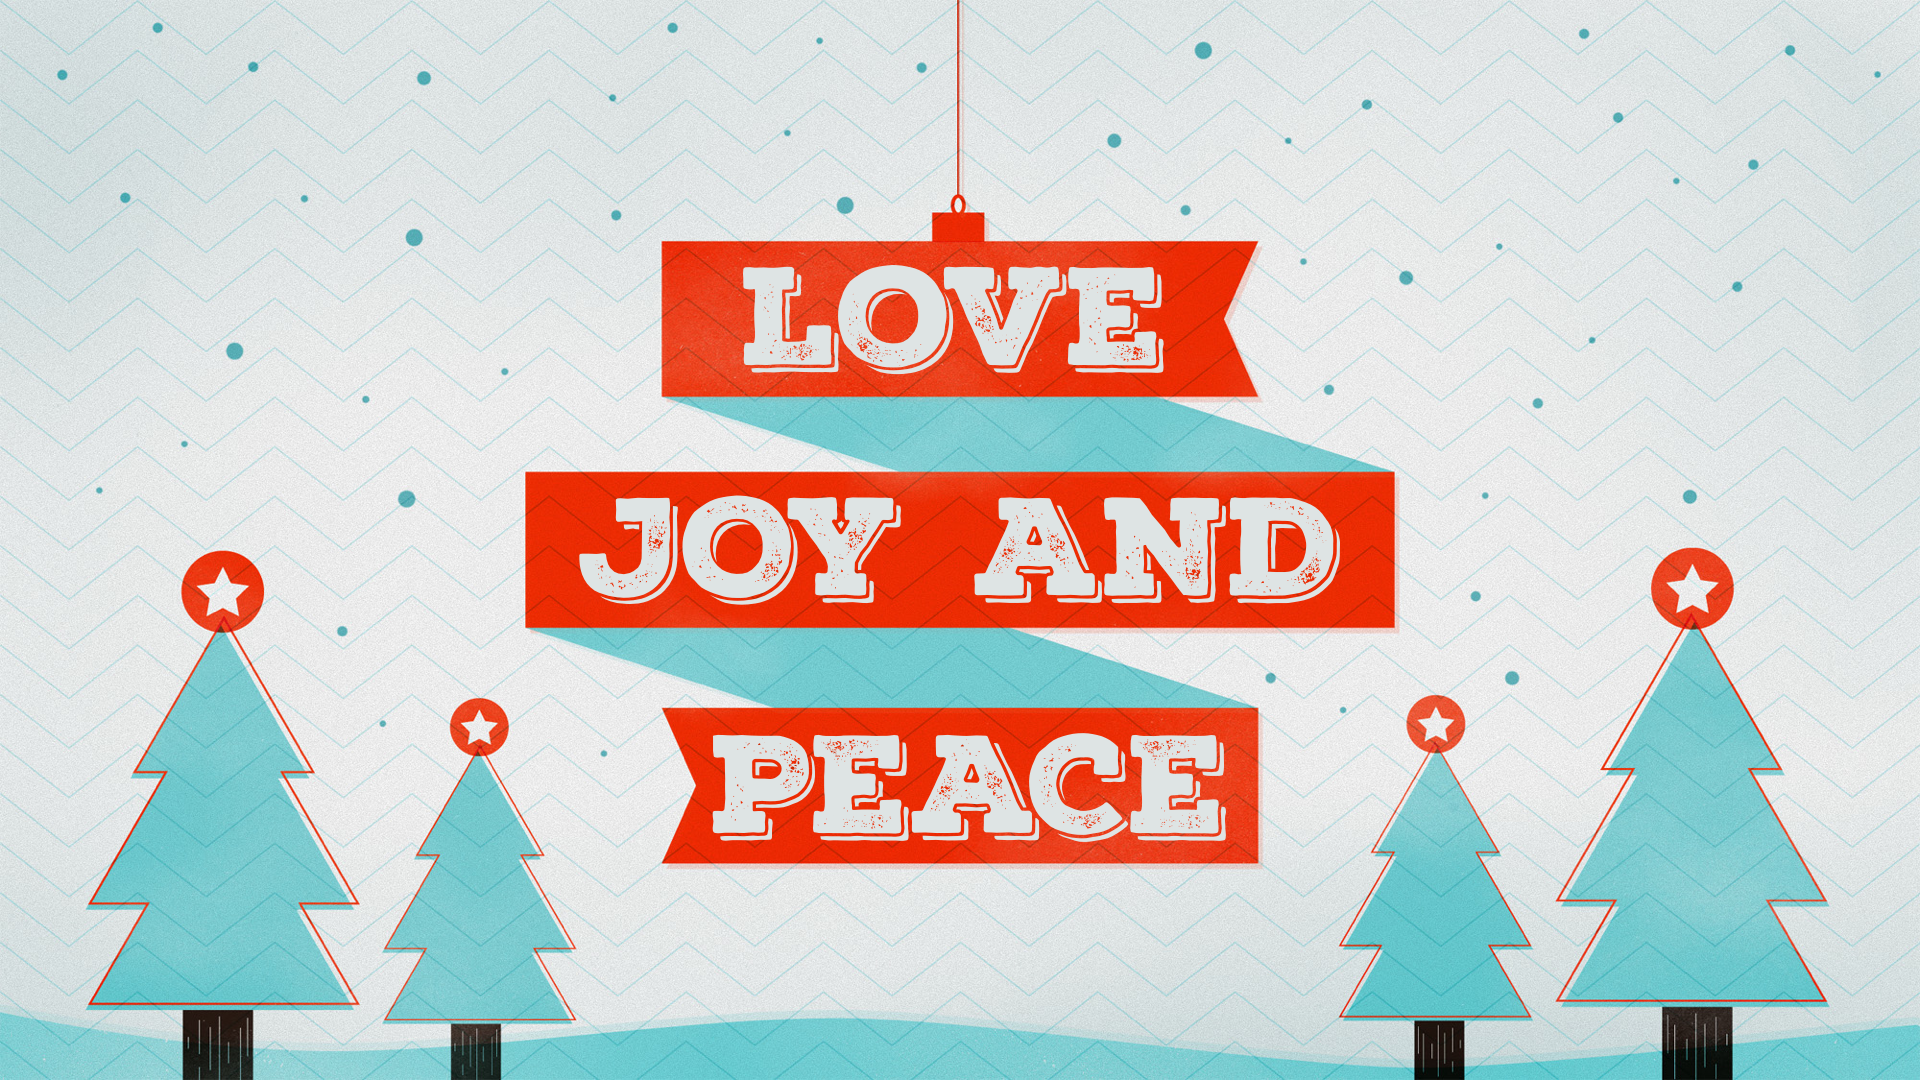 Love Joy and Peace